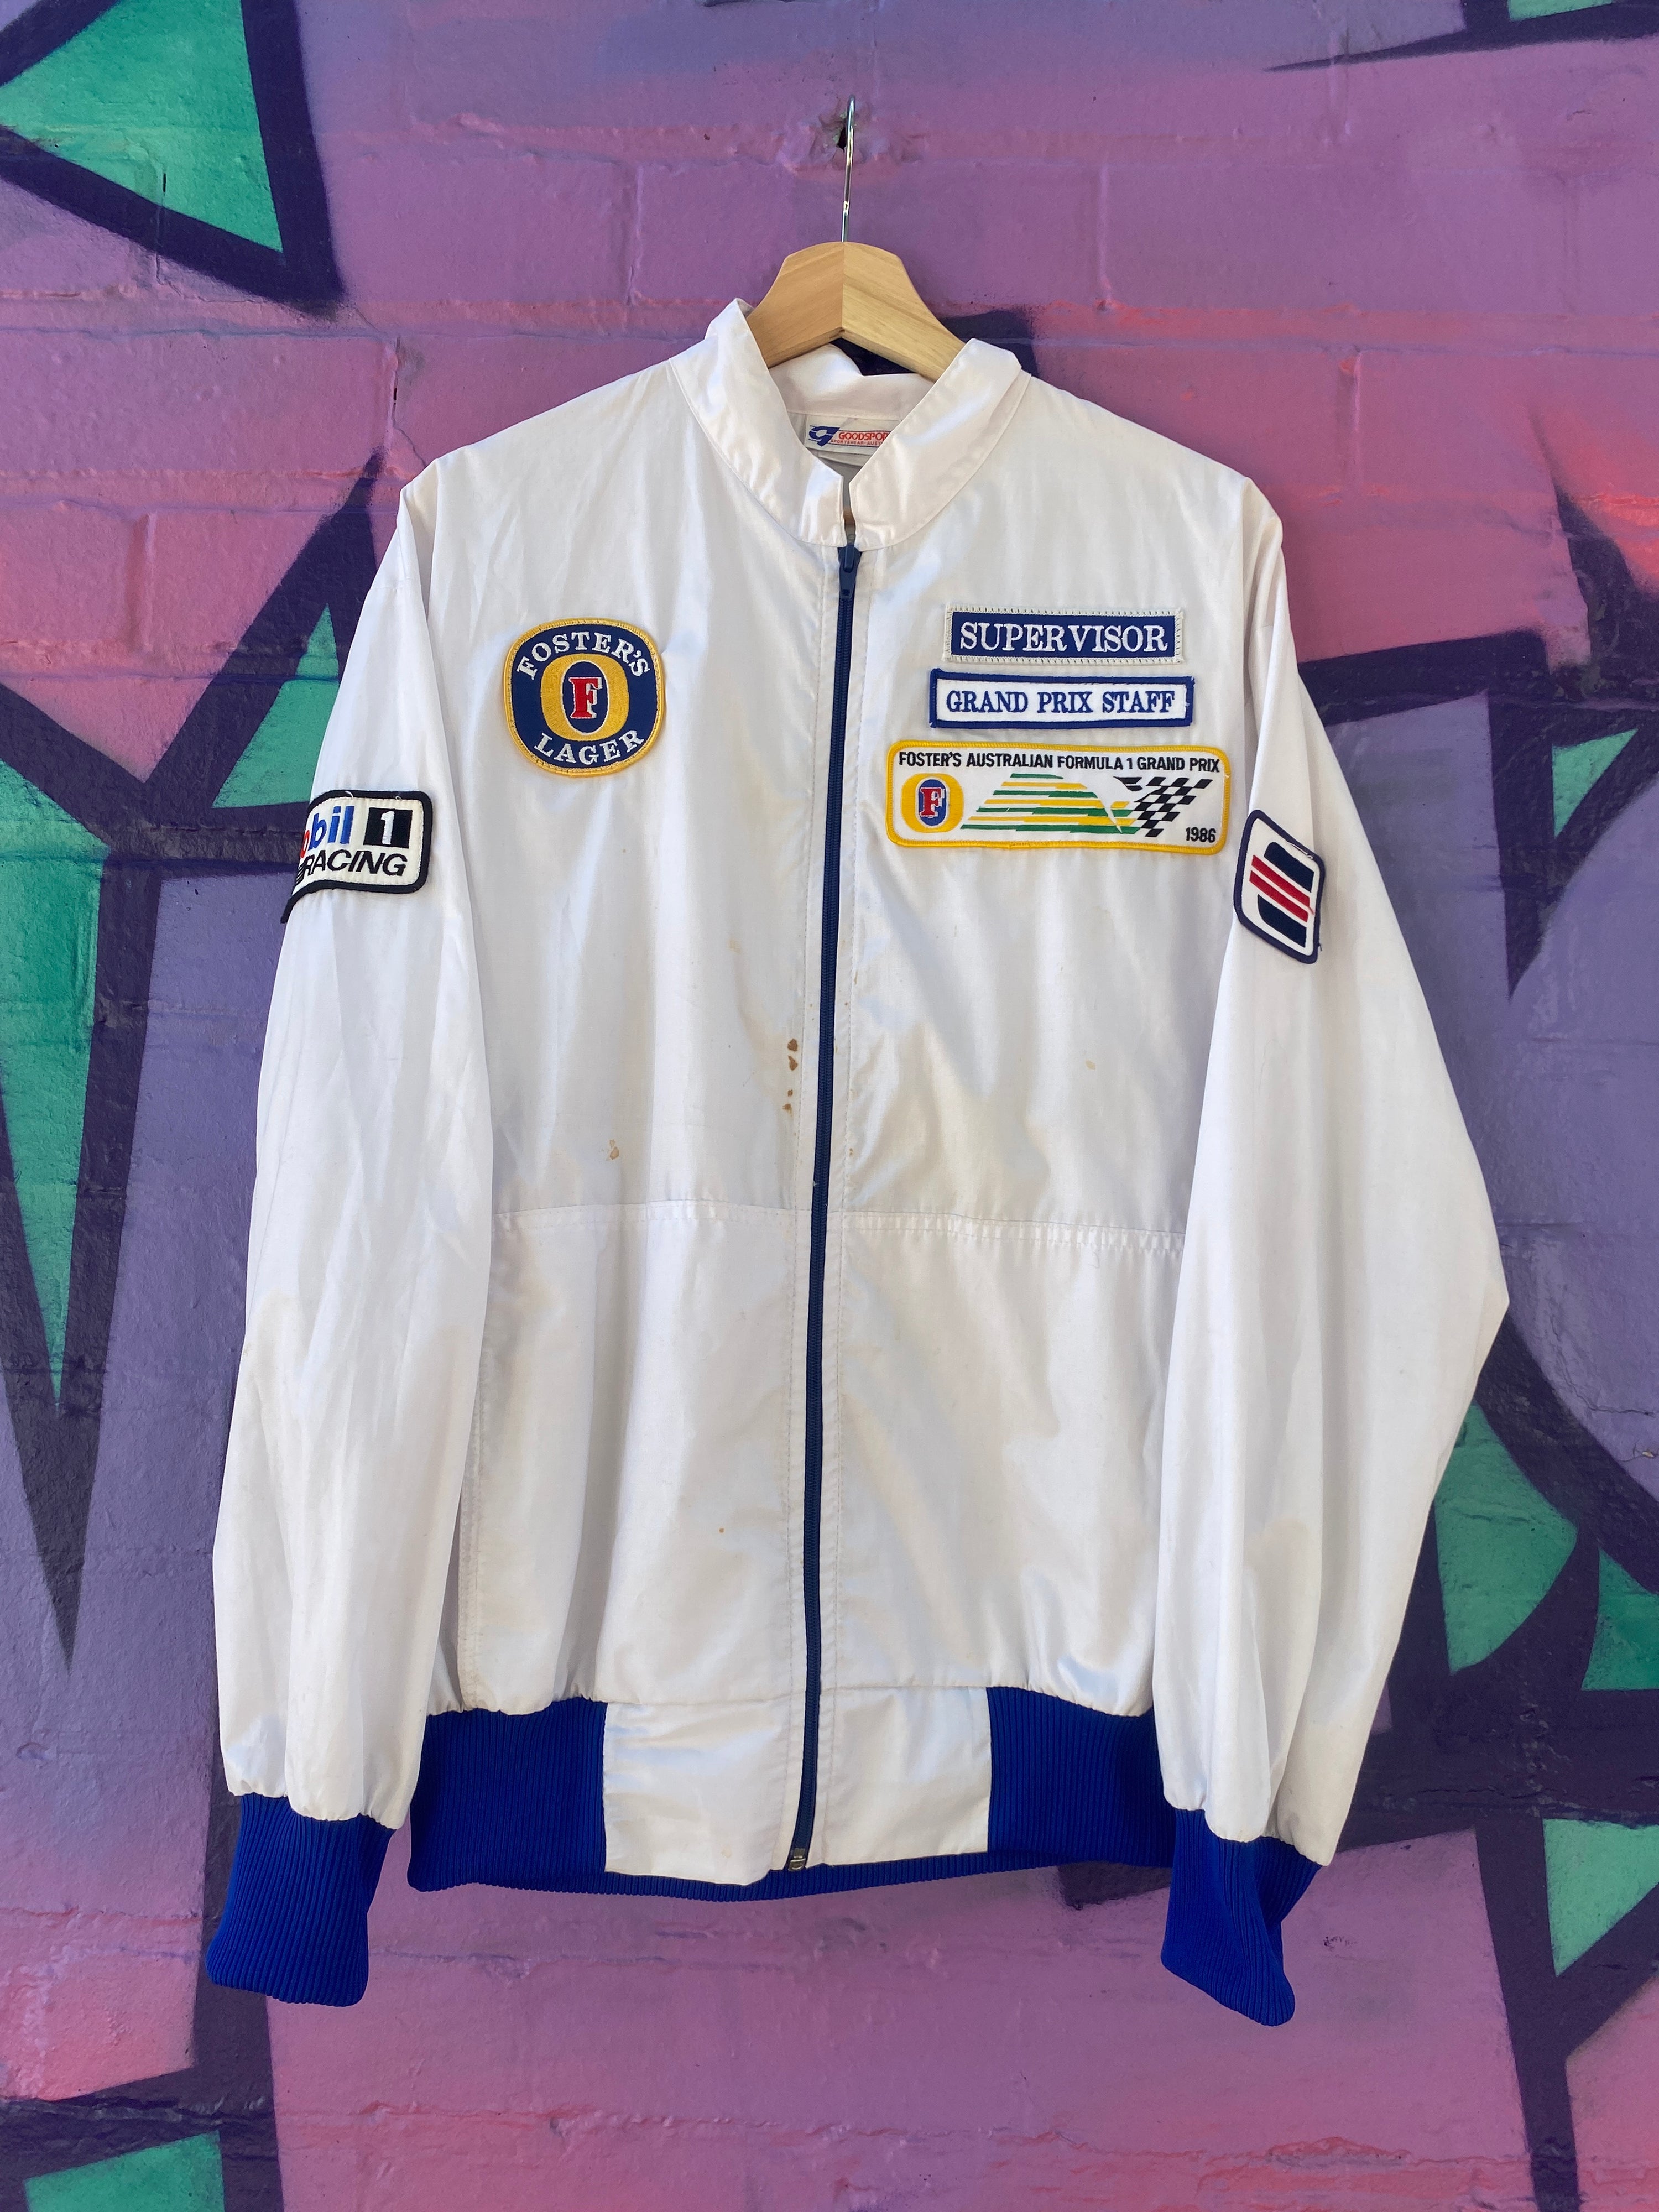 L - Signed Vintage Australian F1 Grand Prix Supervisor Jacket Blue/White